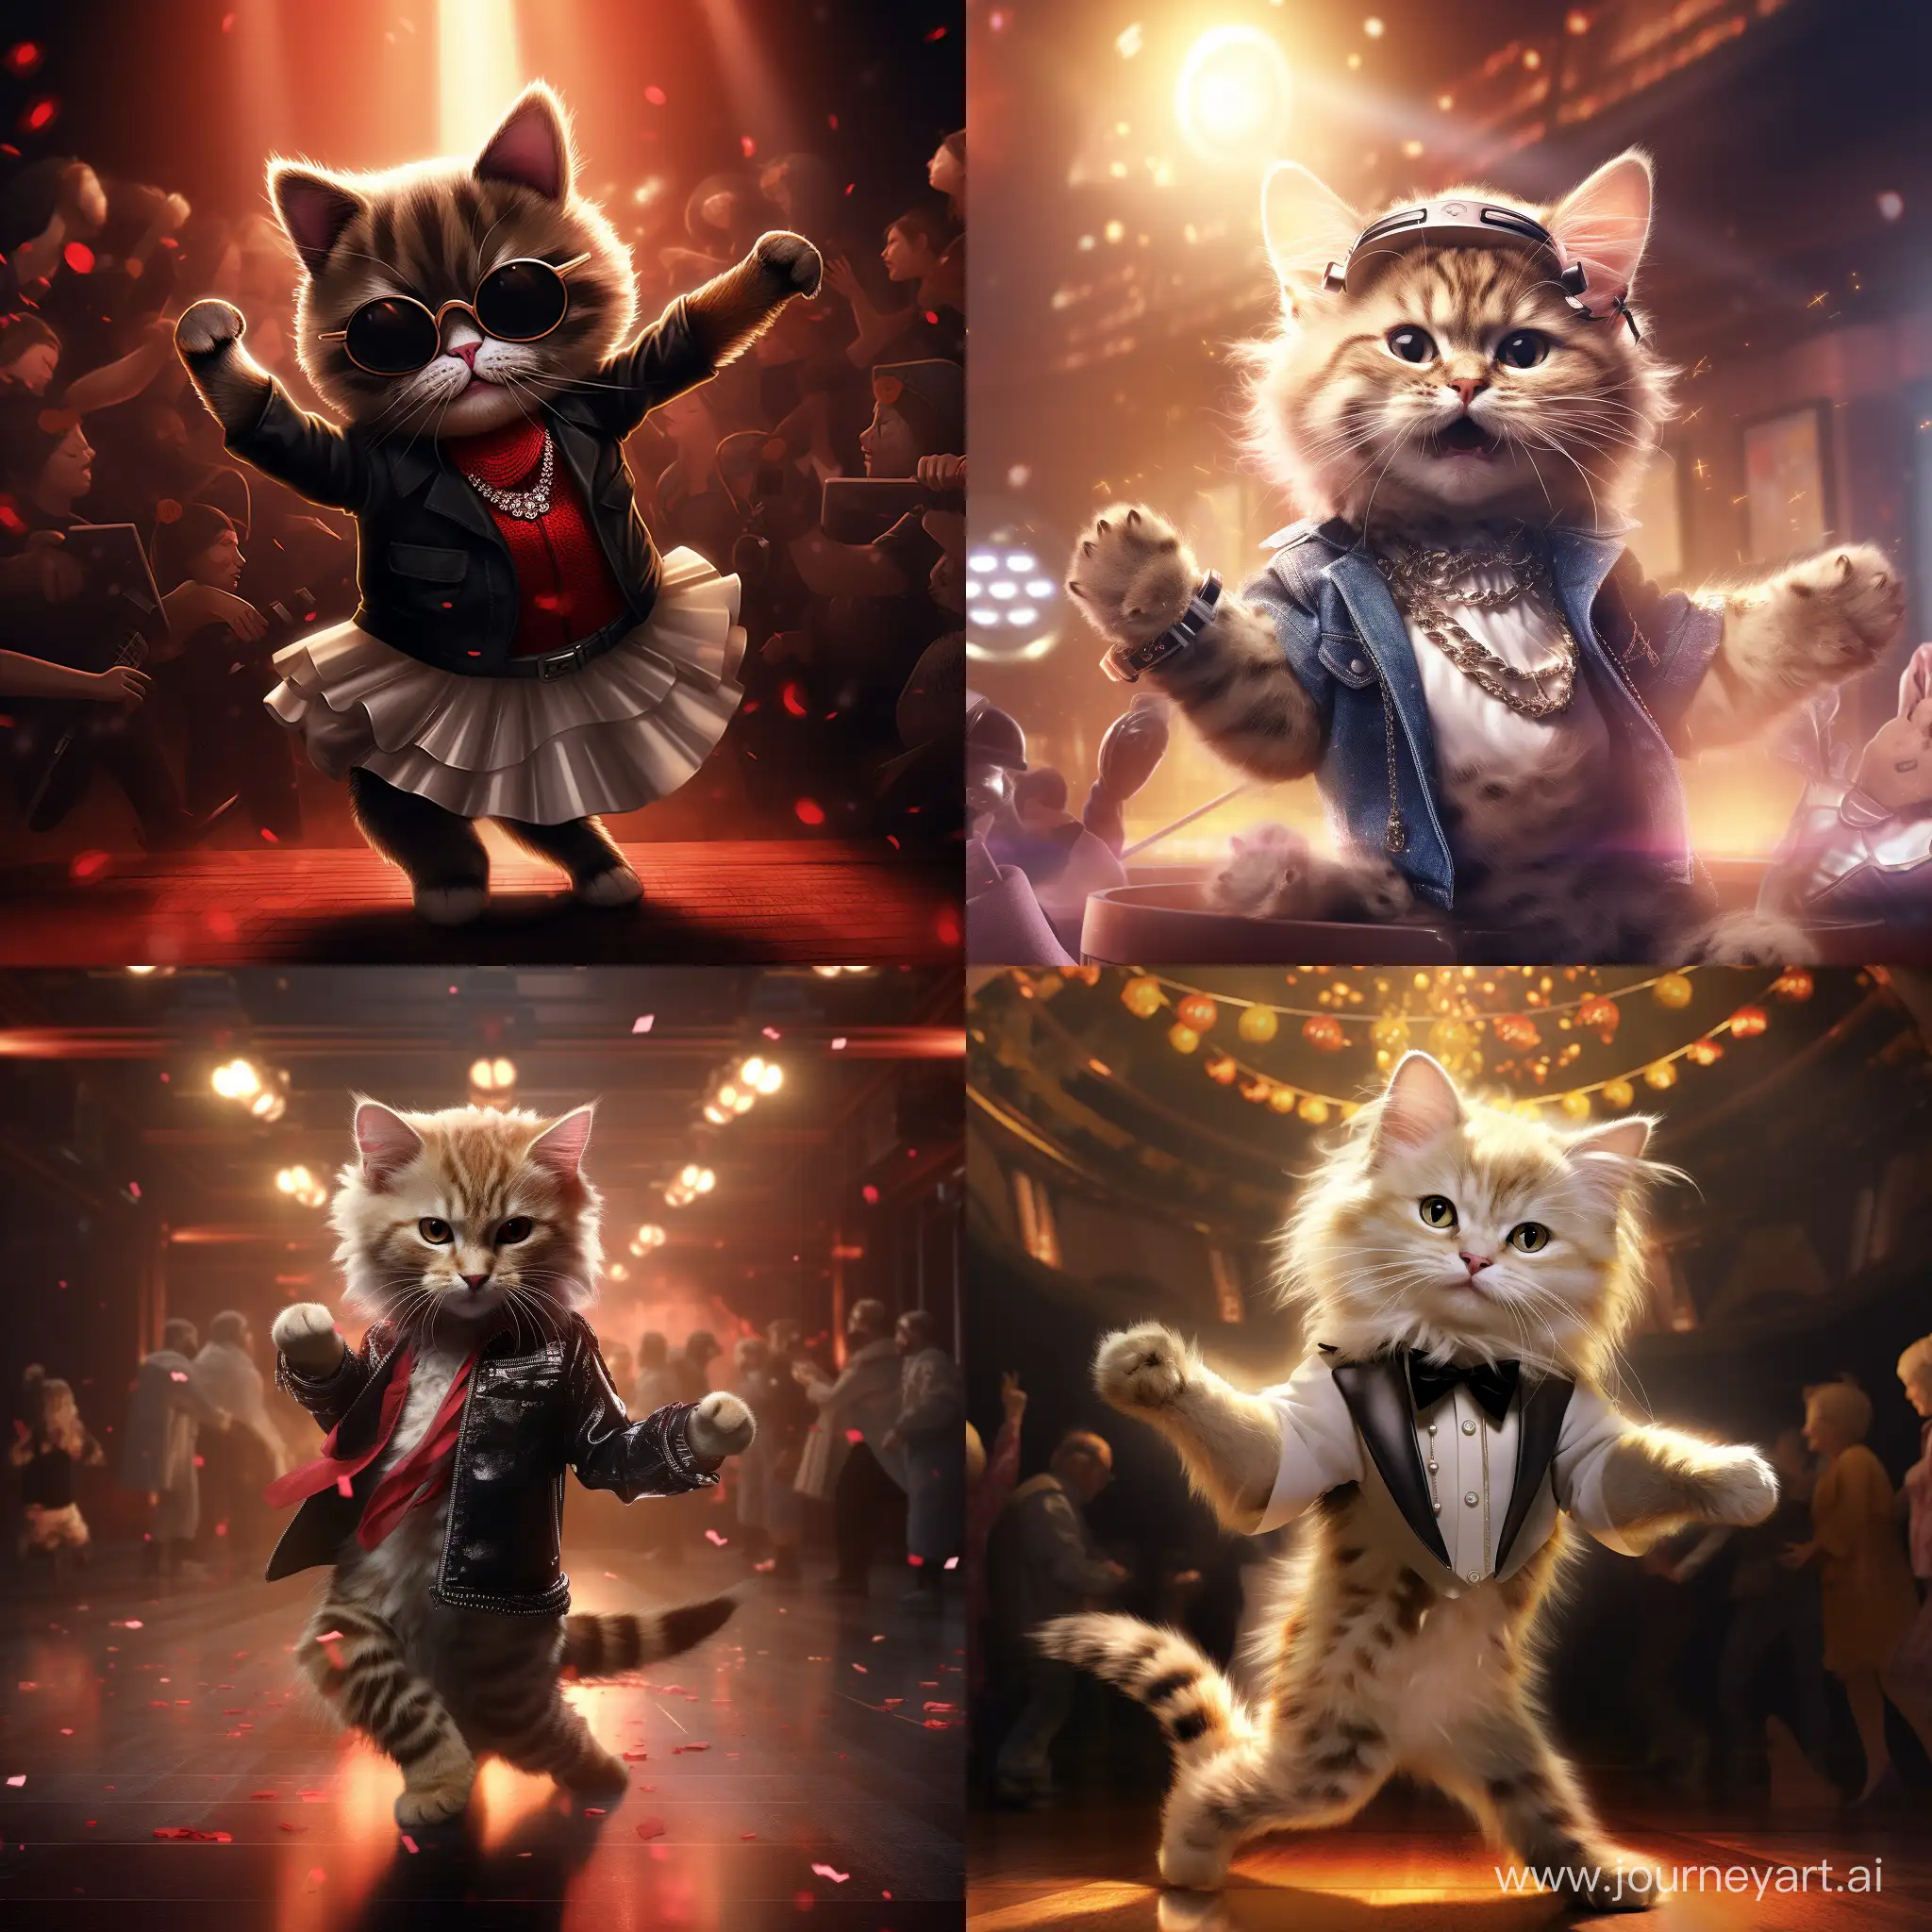 Stylish-Kitten-Dancing-in-Trendy-Club-Atmosphere